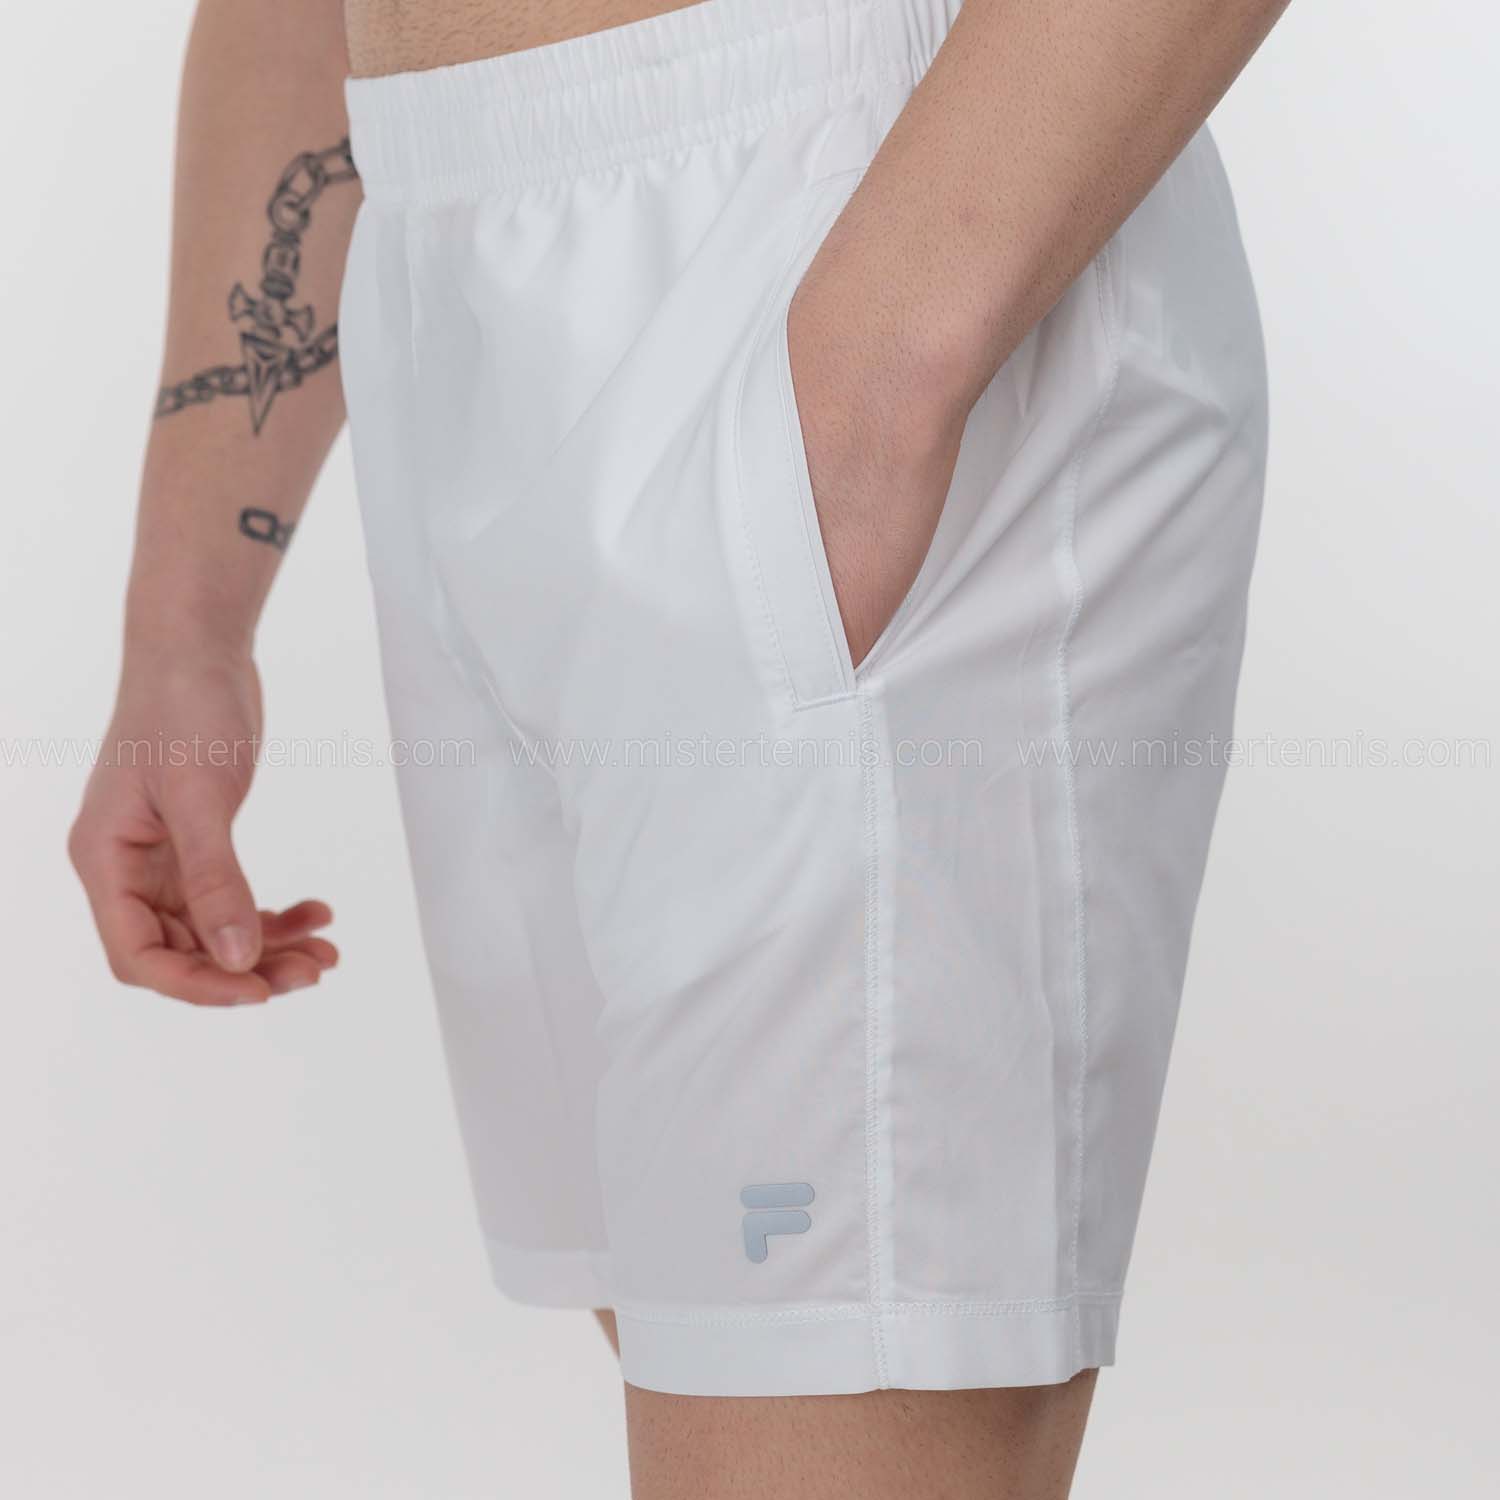 Fila Constantin 7in Shorts - White